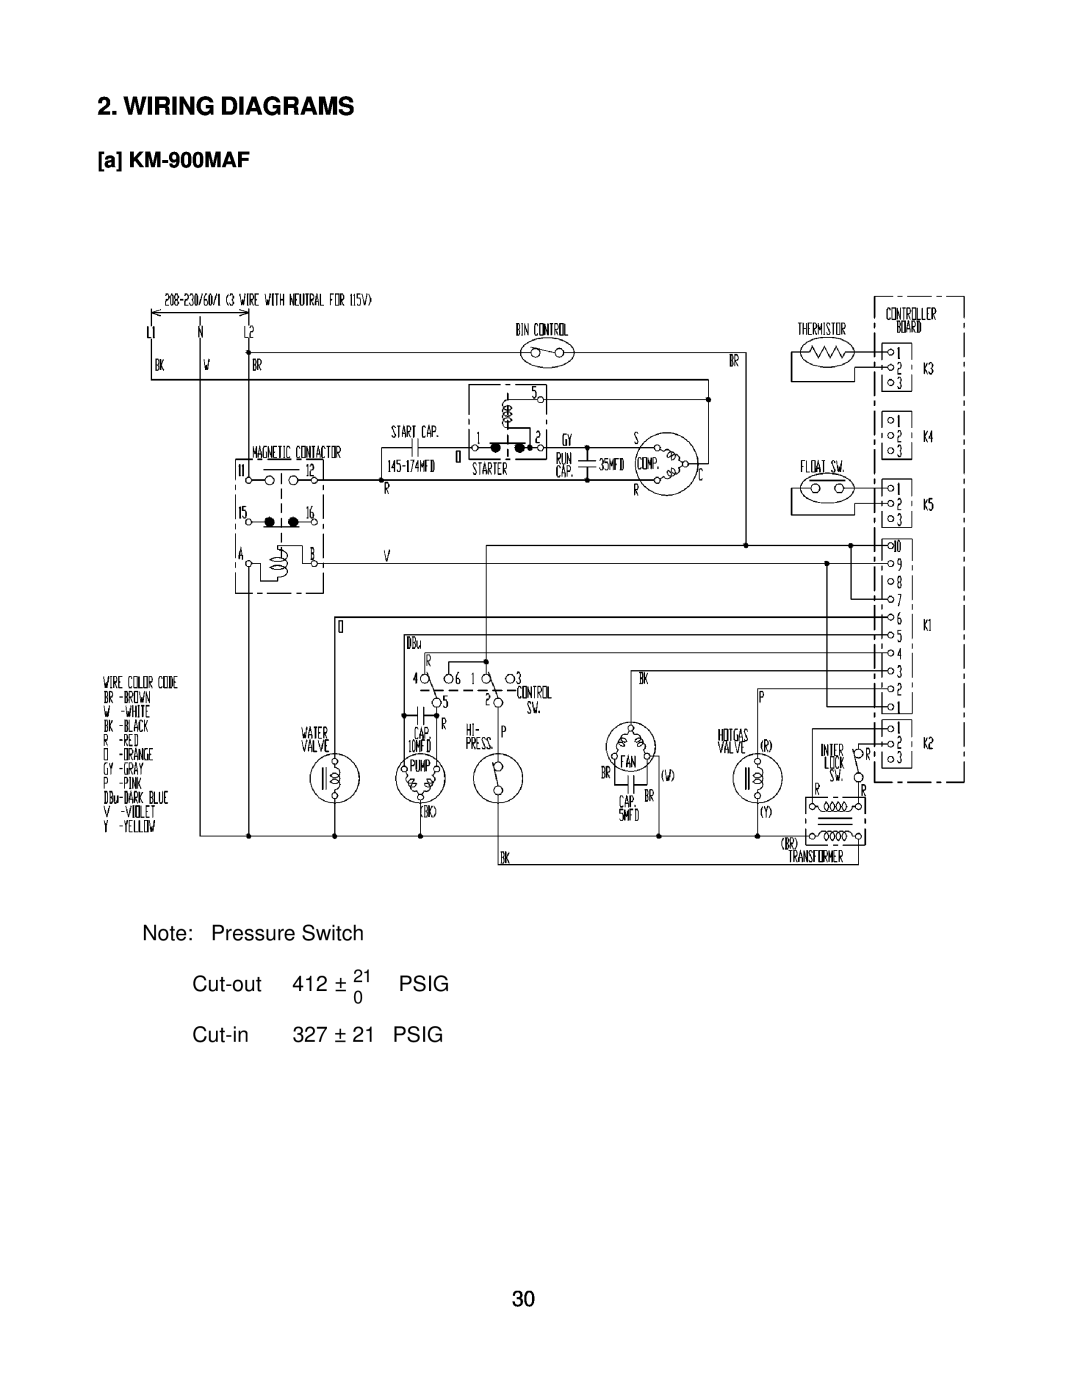 Hoshizaki KM-900MRF3, KM-900MWF service manual Wiring Diagrams, a KM-900MAF 